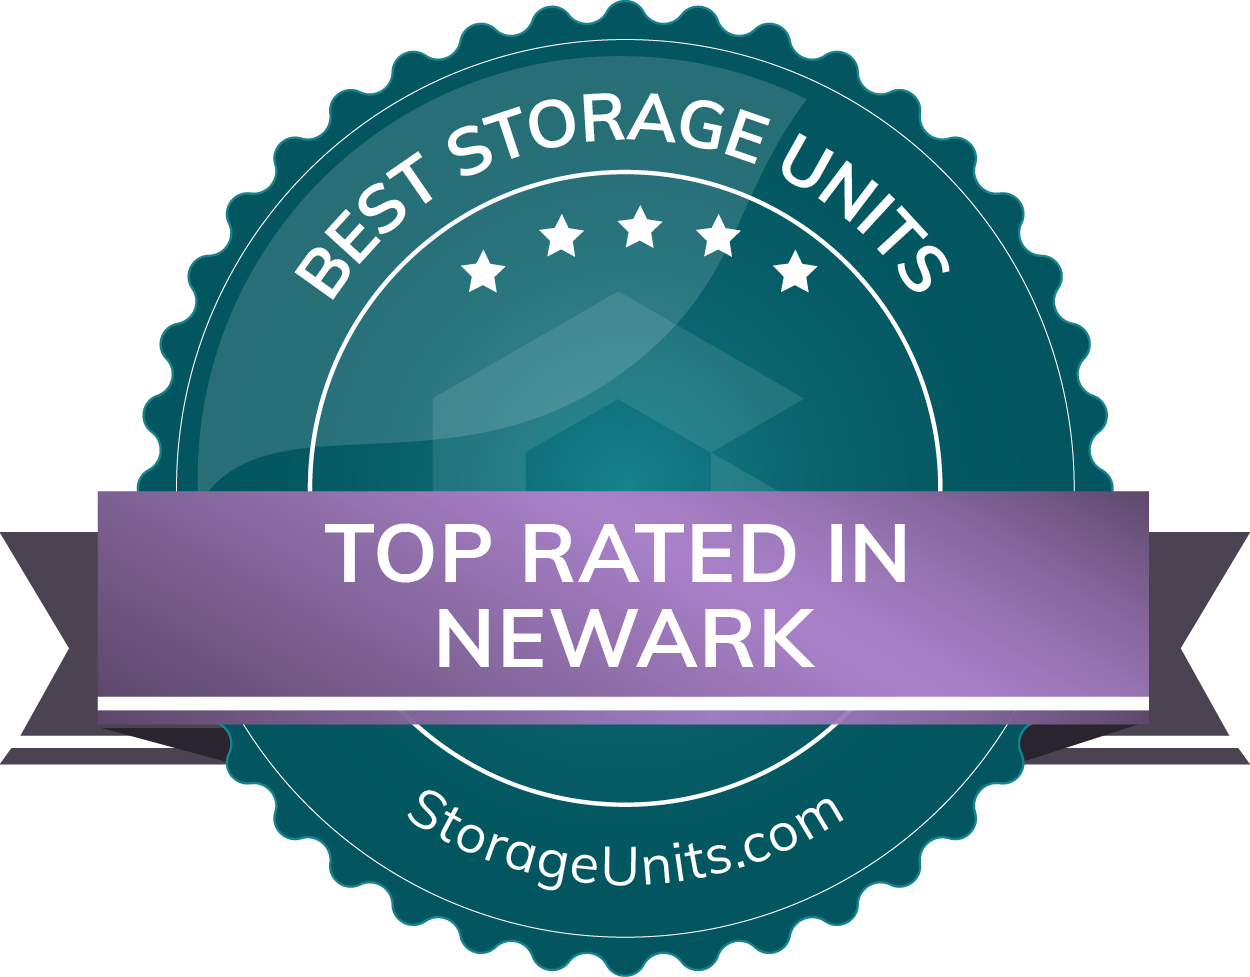 Best Self Storage Units in Newark, New Jersey of 2022